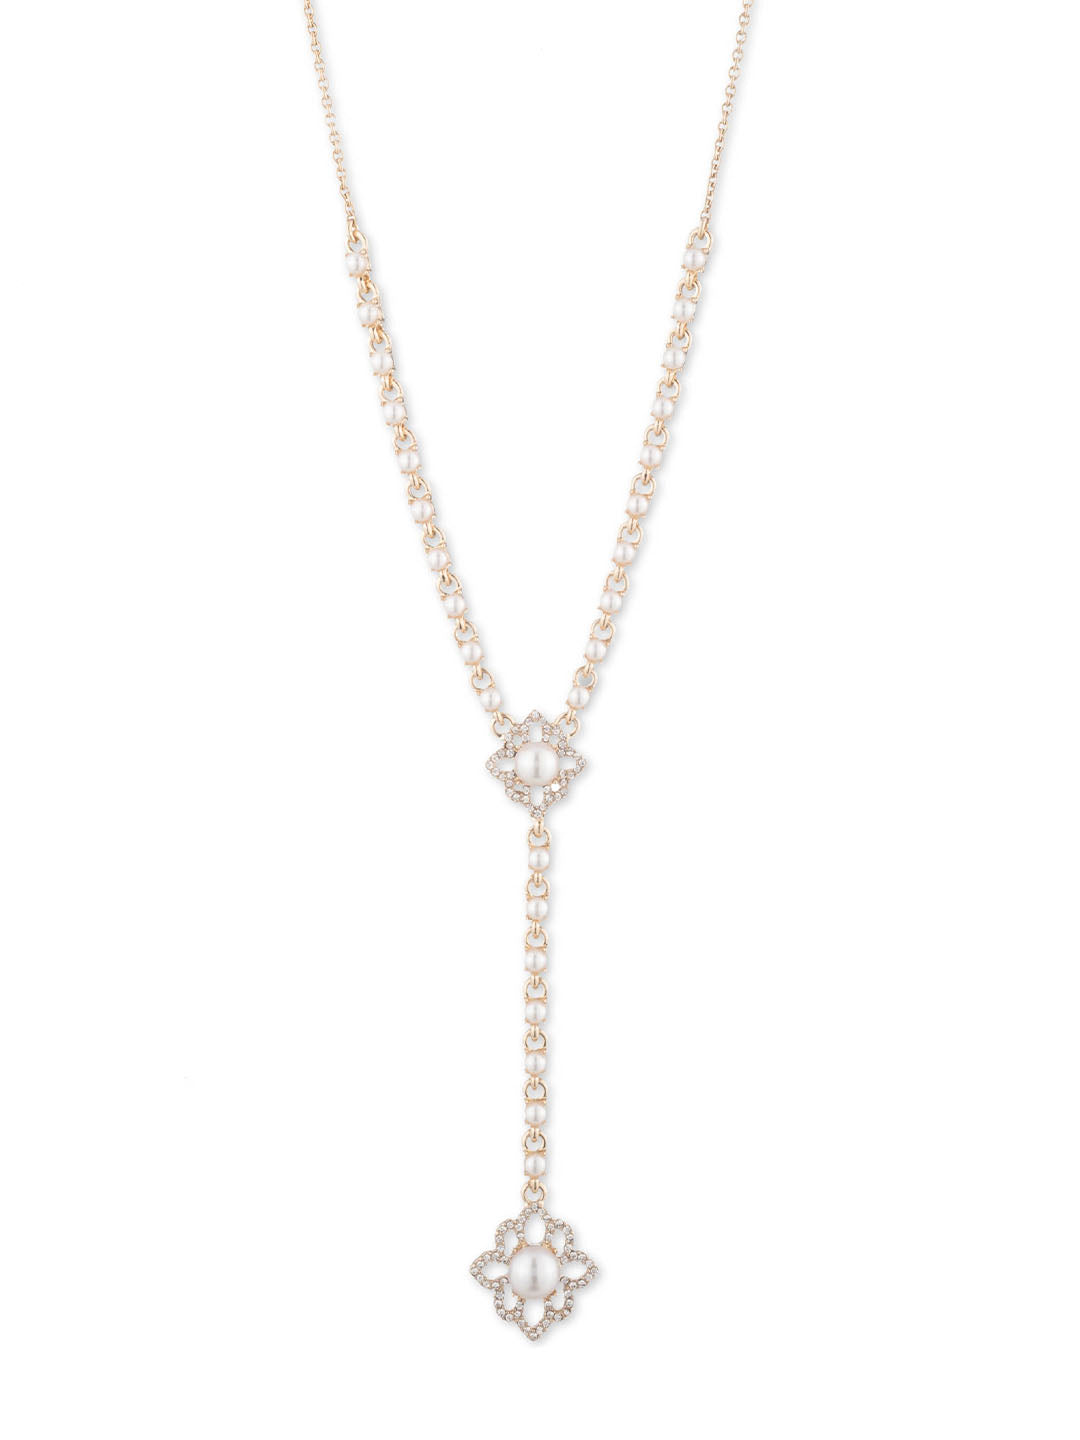 Pretty Pearl Y Necklace | Marchesa